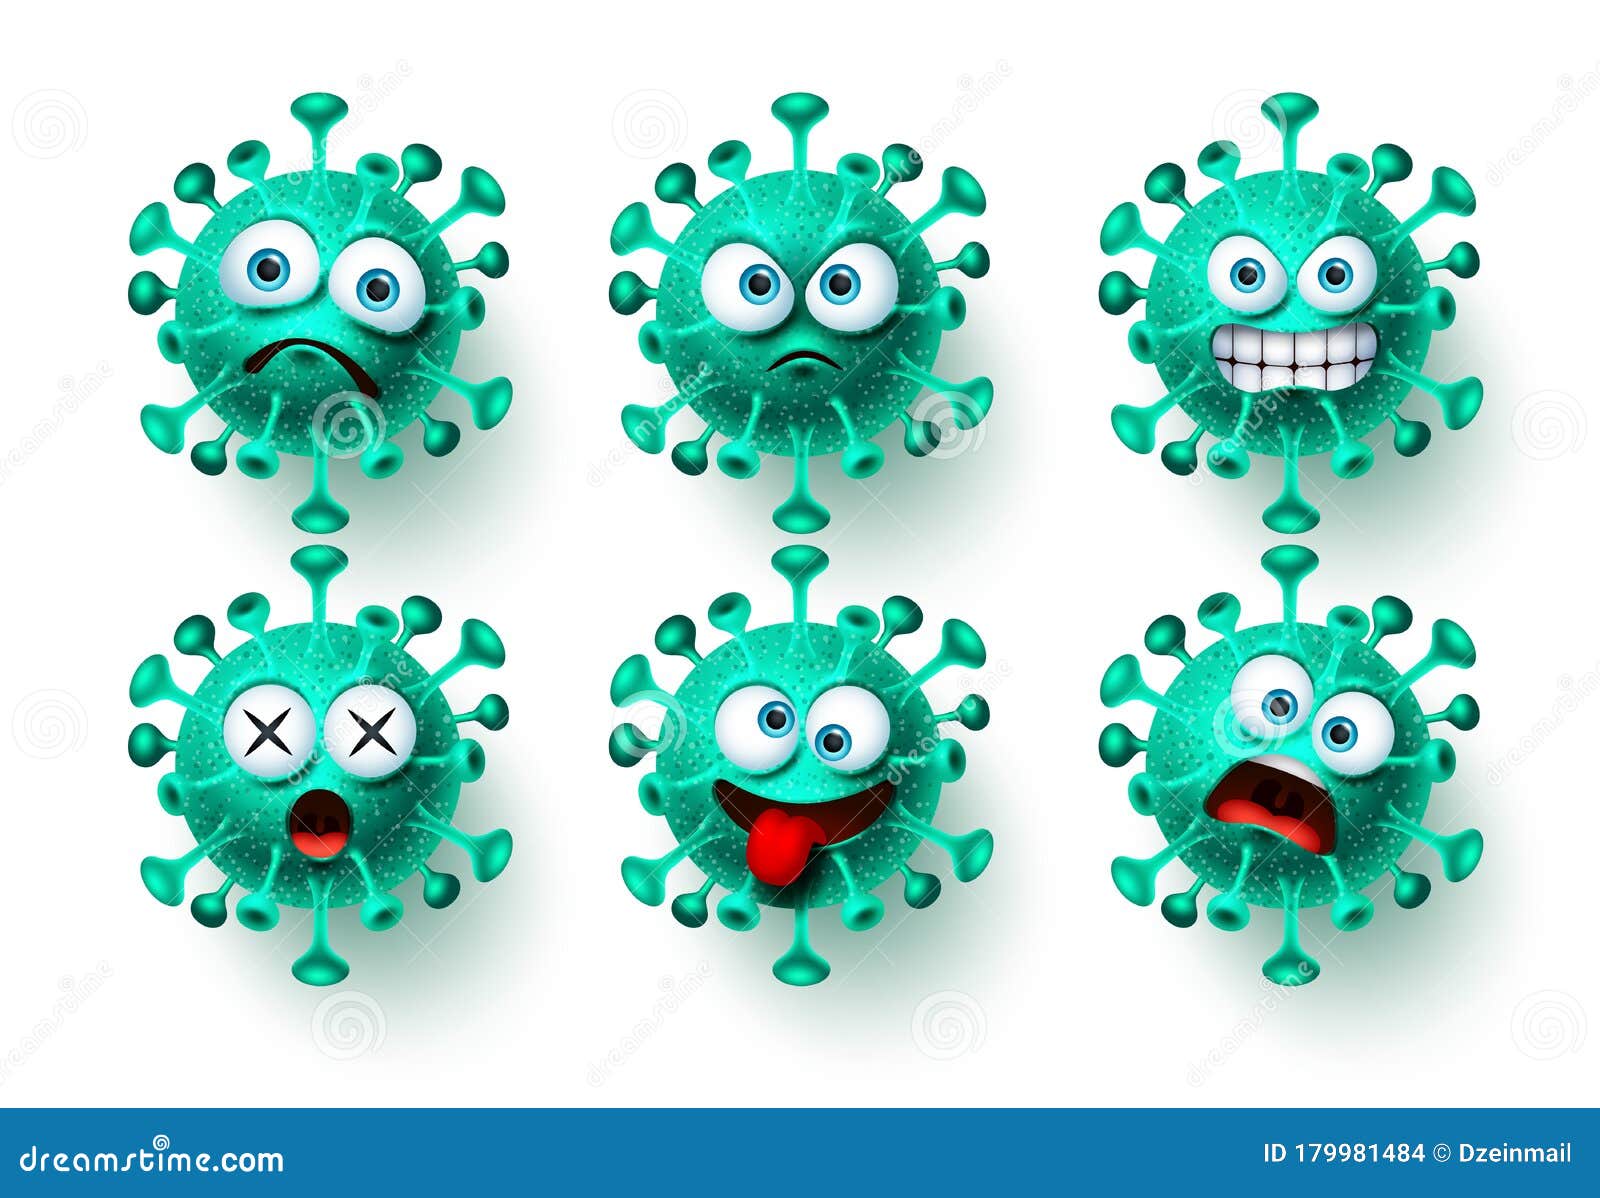 corona virus icon  set. ncov corona virus emoticon and emoji